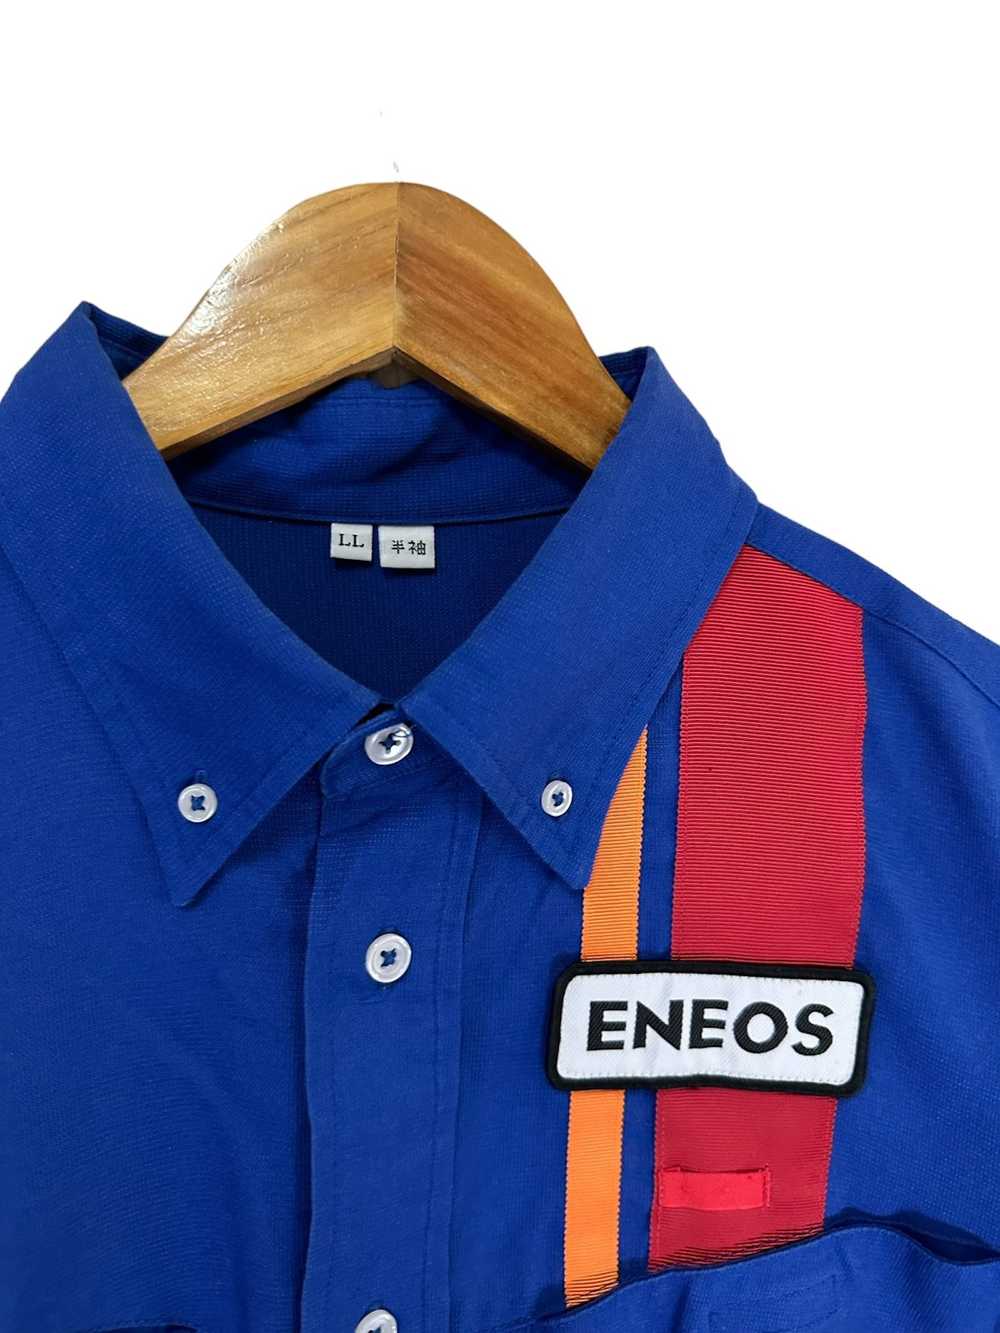 Japanese Brand Eneos Shirts Button Ups Racing - image 3